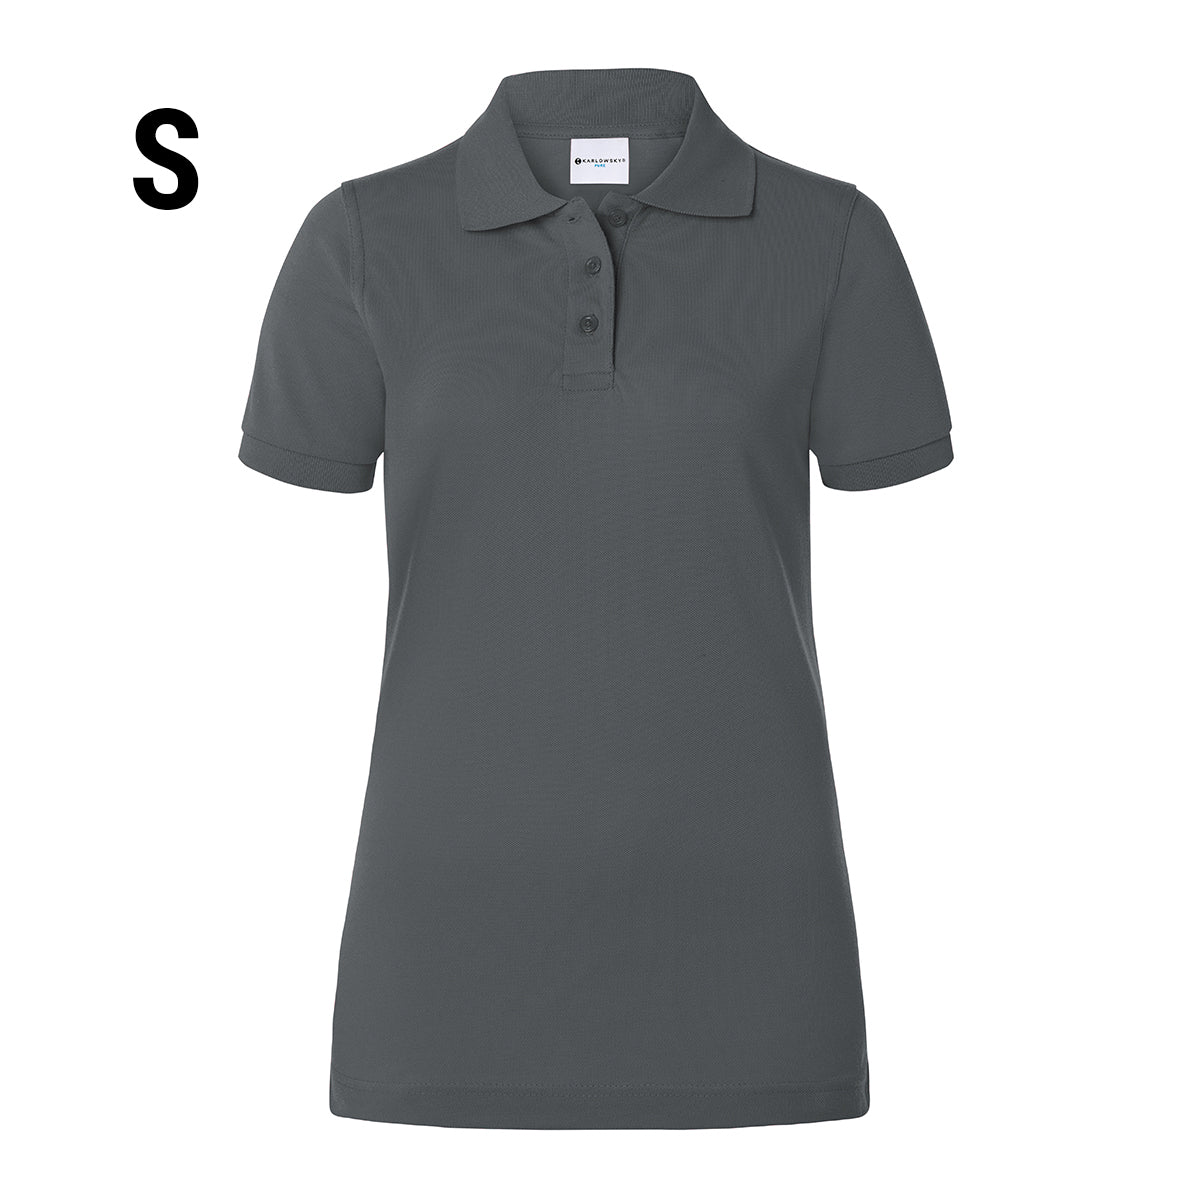 (6 stk) Karlowsky - Workwear Polo Shirt Basic til Damer - Antracit - Størrelse: S